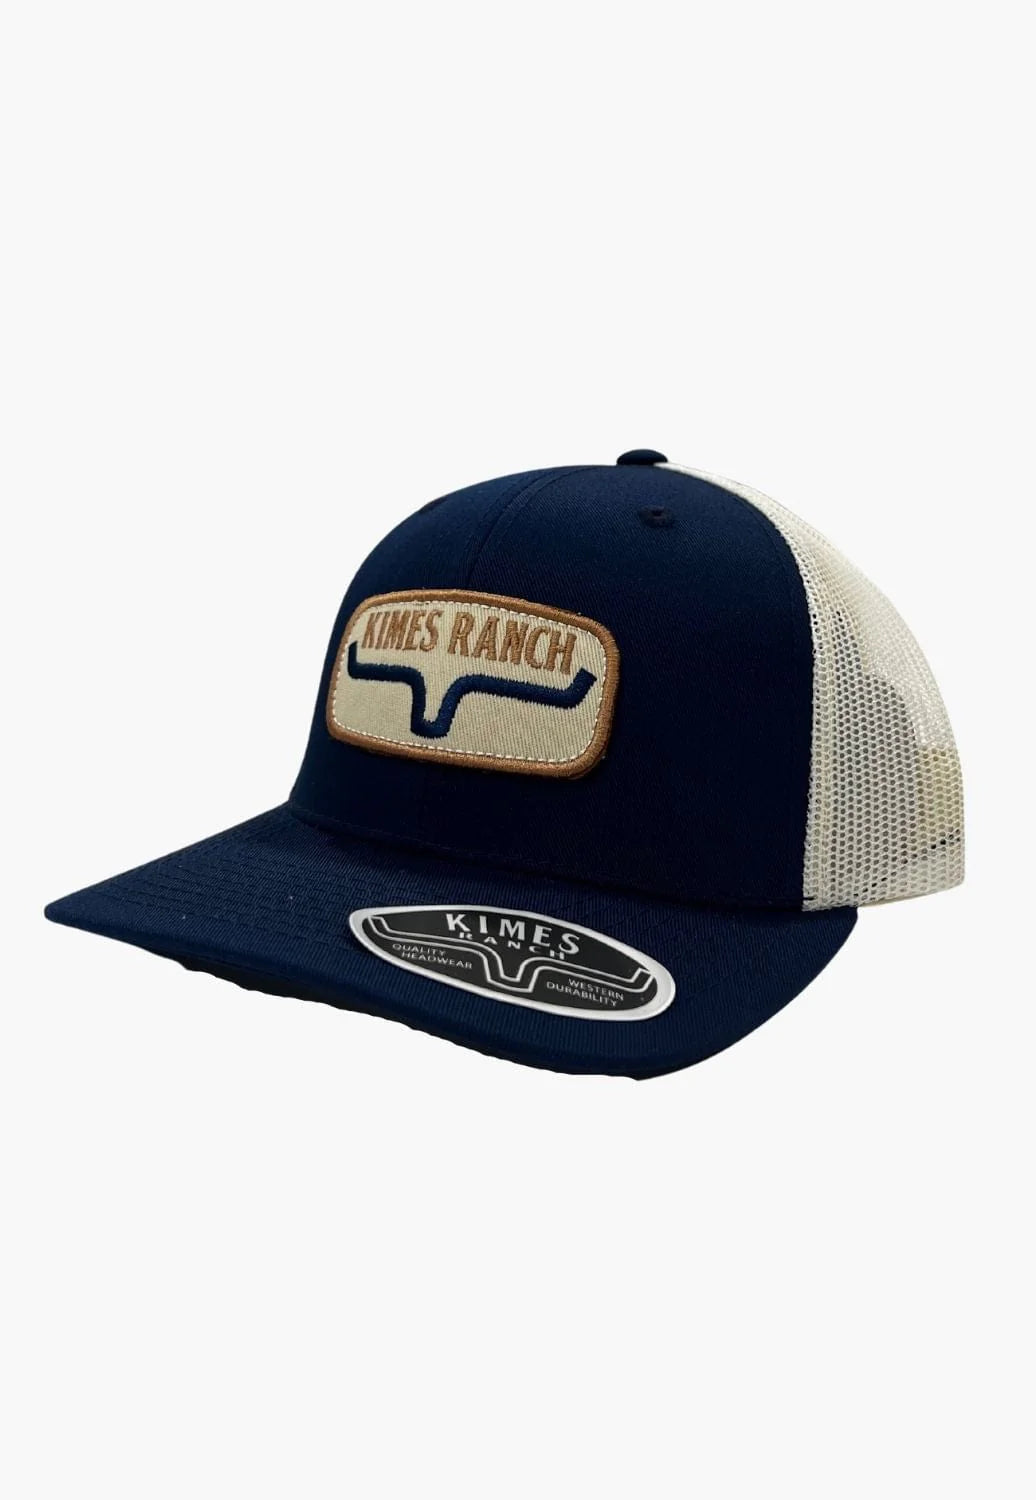 Kimes Rolling Trucker Hat Carbon Blue